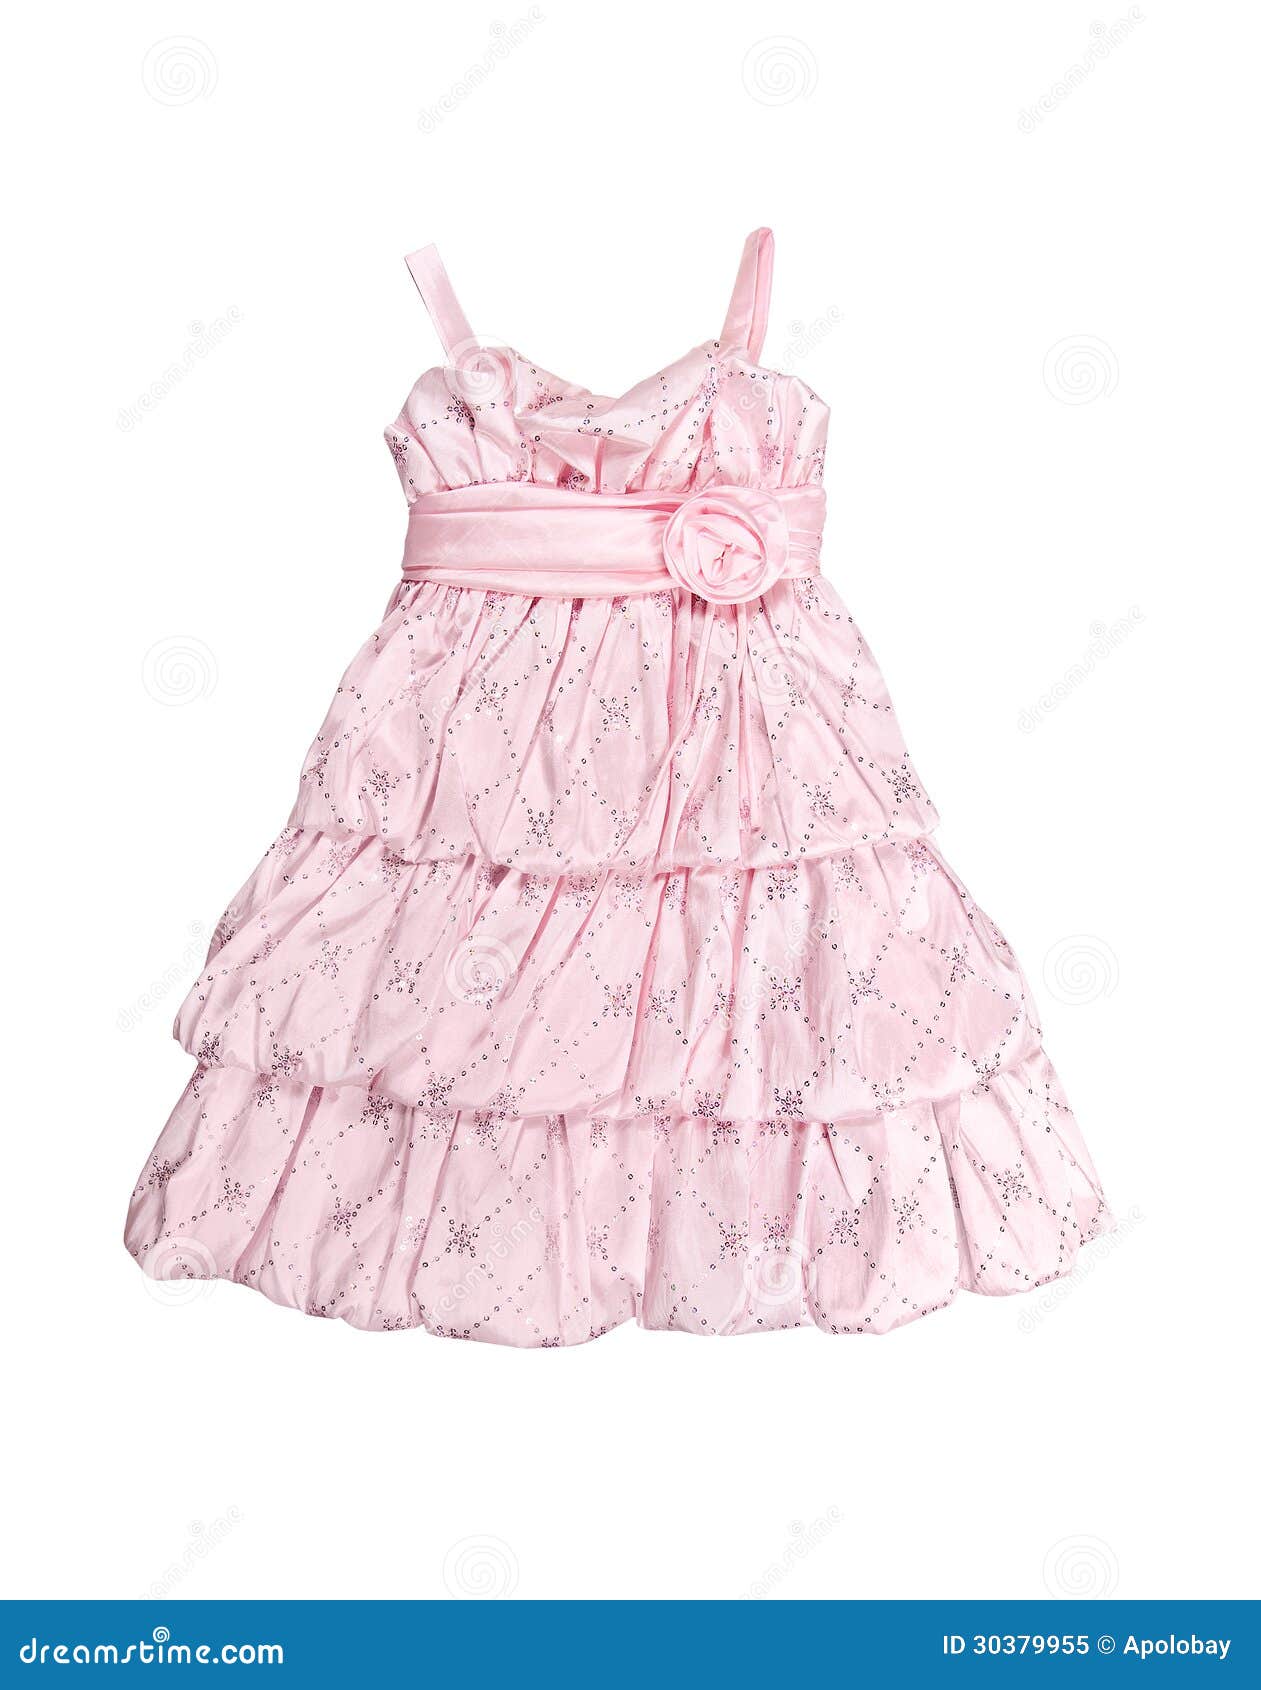 Pink Baby Holiday Dress Isolated on White Background Stock Image ...